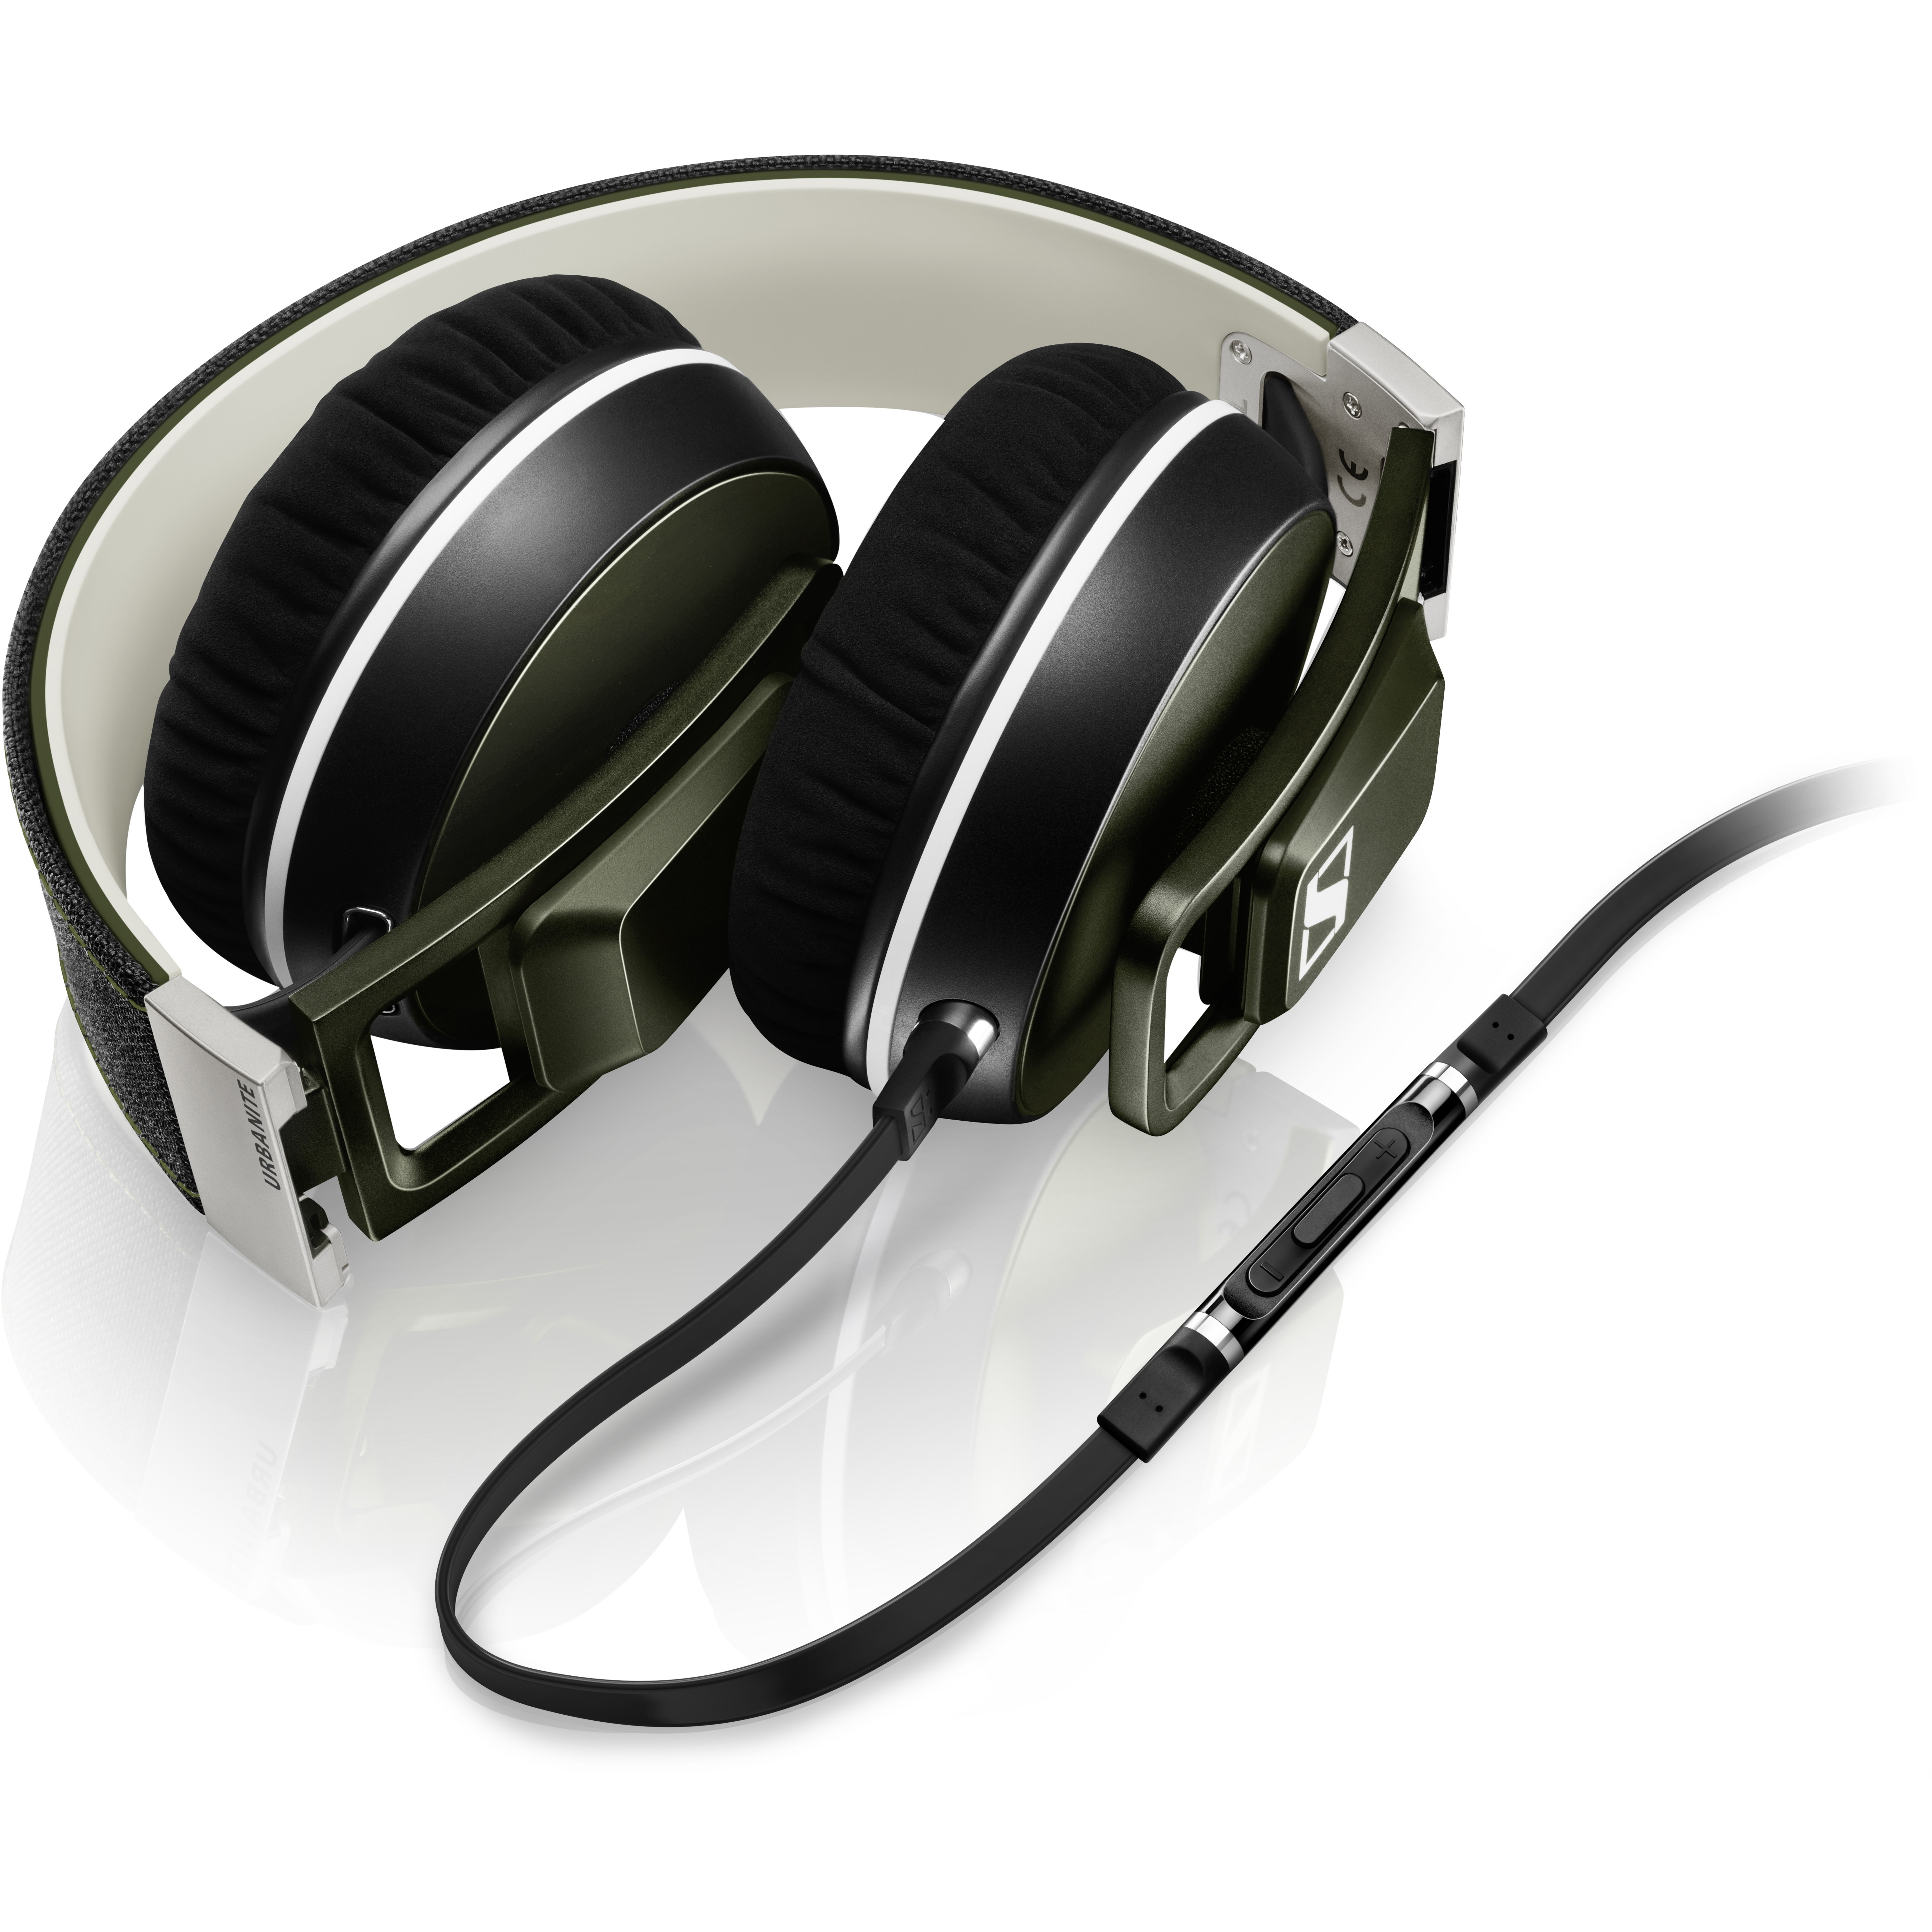 Sennheiser Headphones URBANITE XL - image 4 of 4